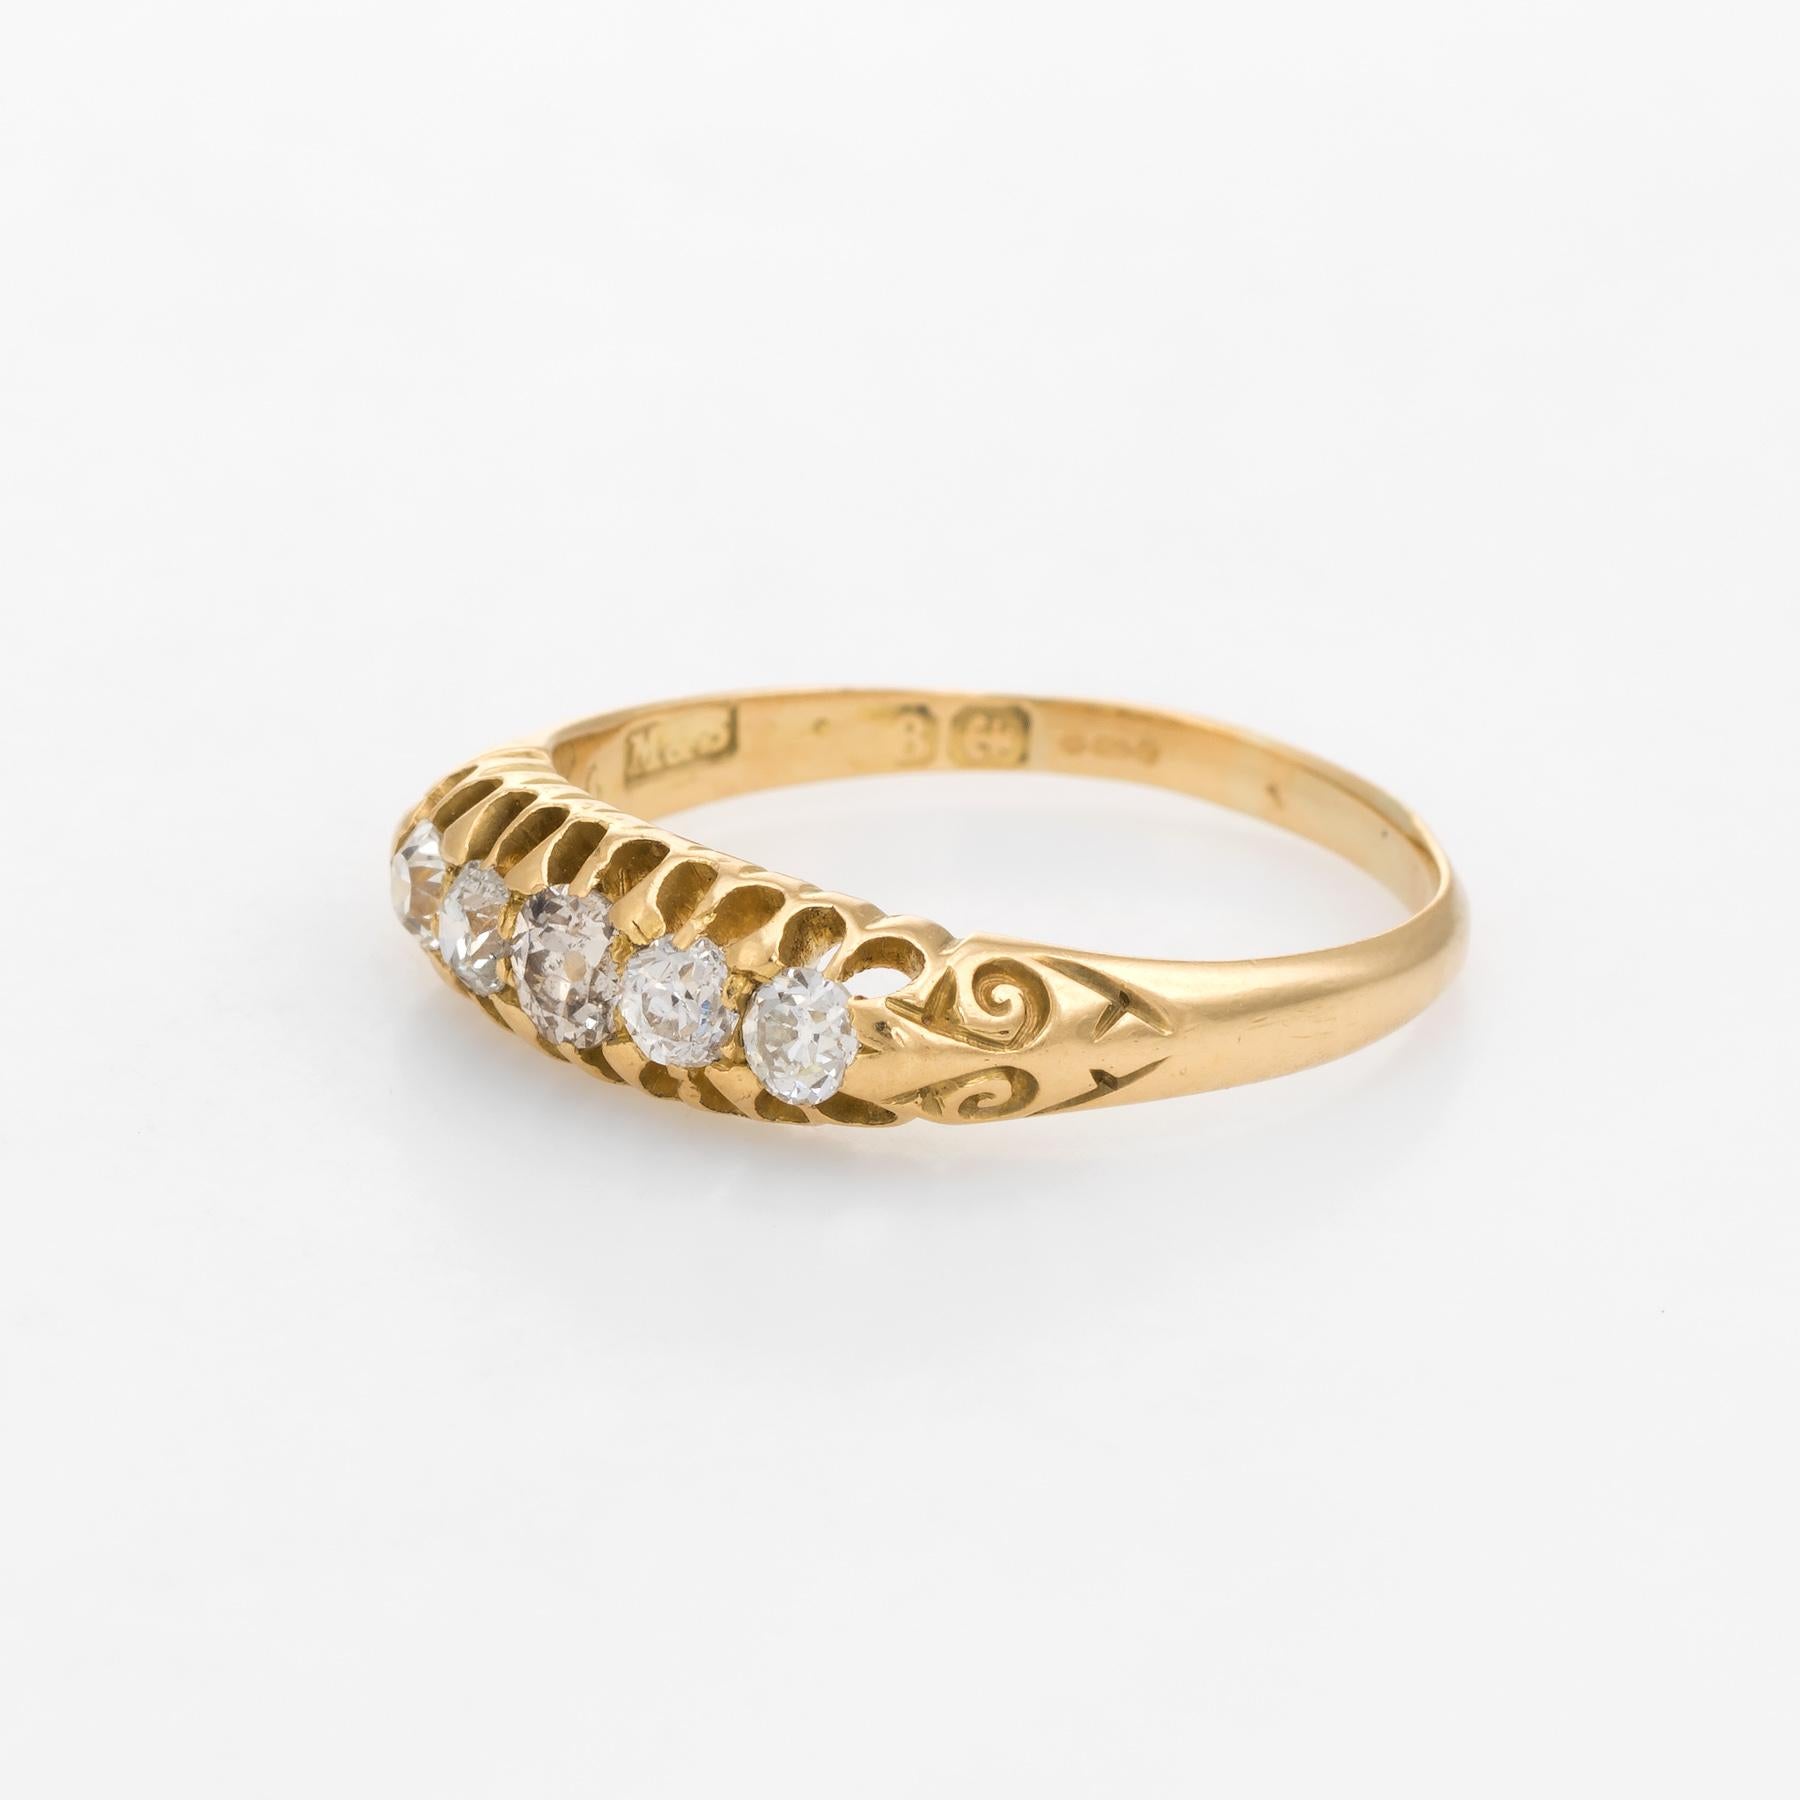 Women's Graduated 5 Old Mine Cut Diamond Ring Antique Edwardian circa 1907 18 Karat Gold